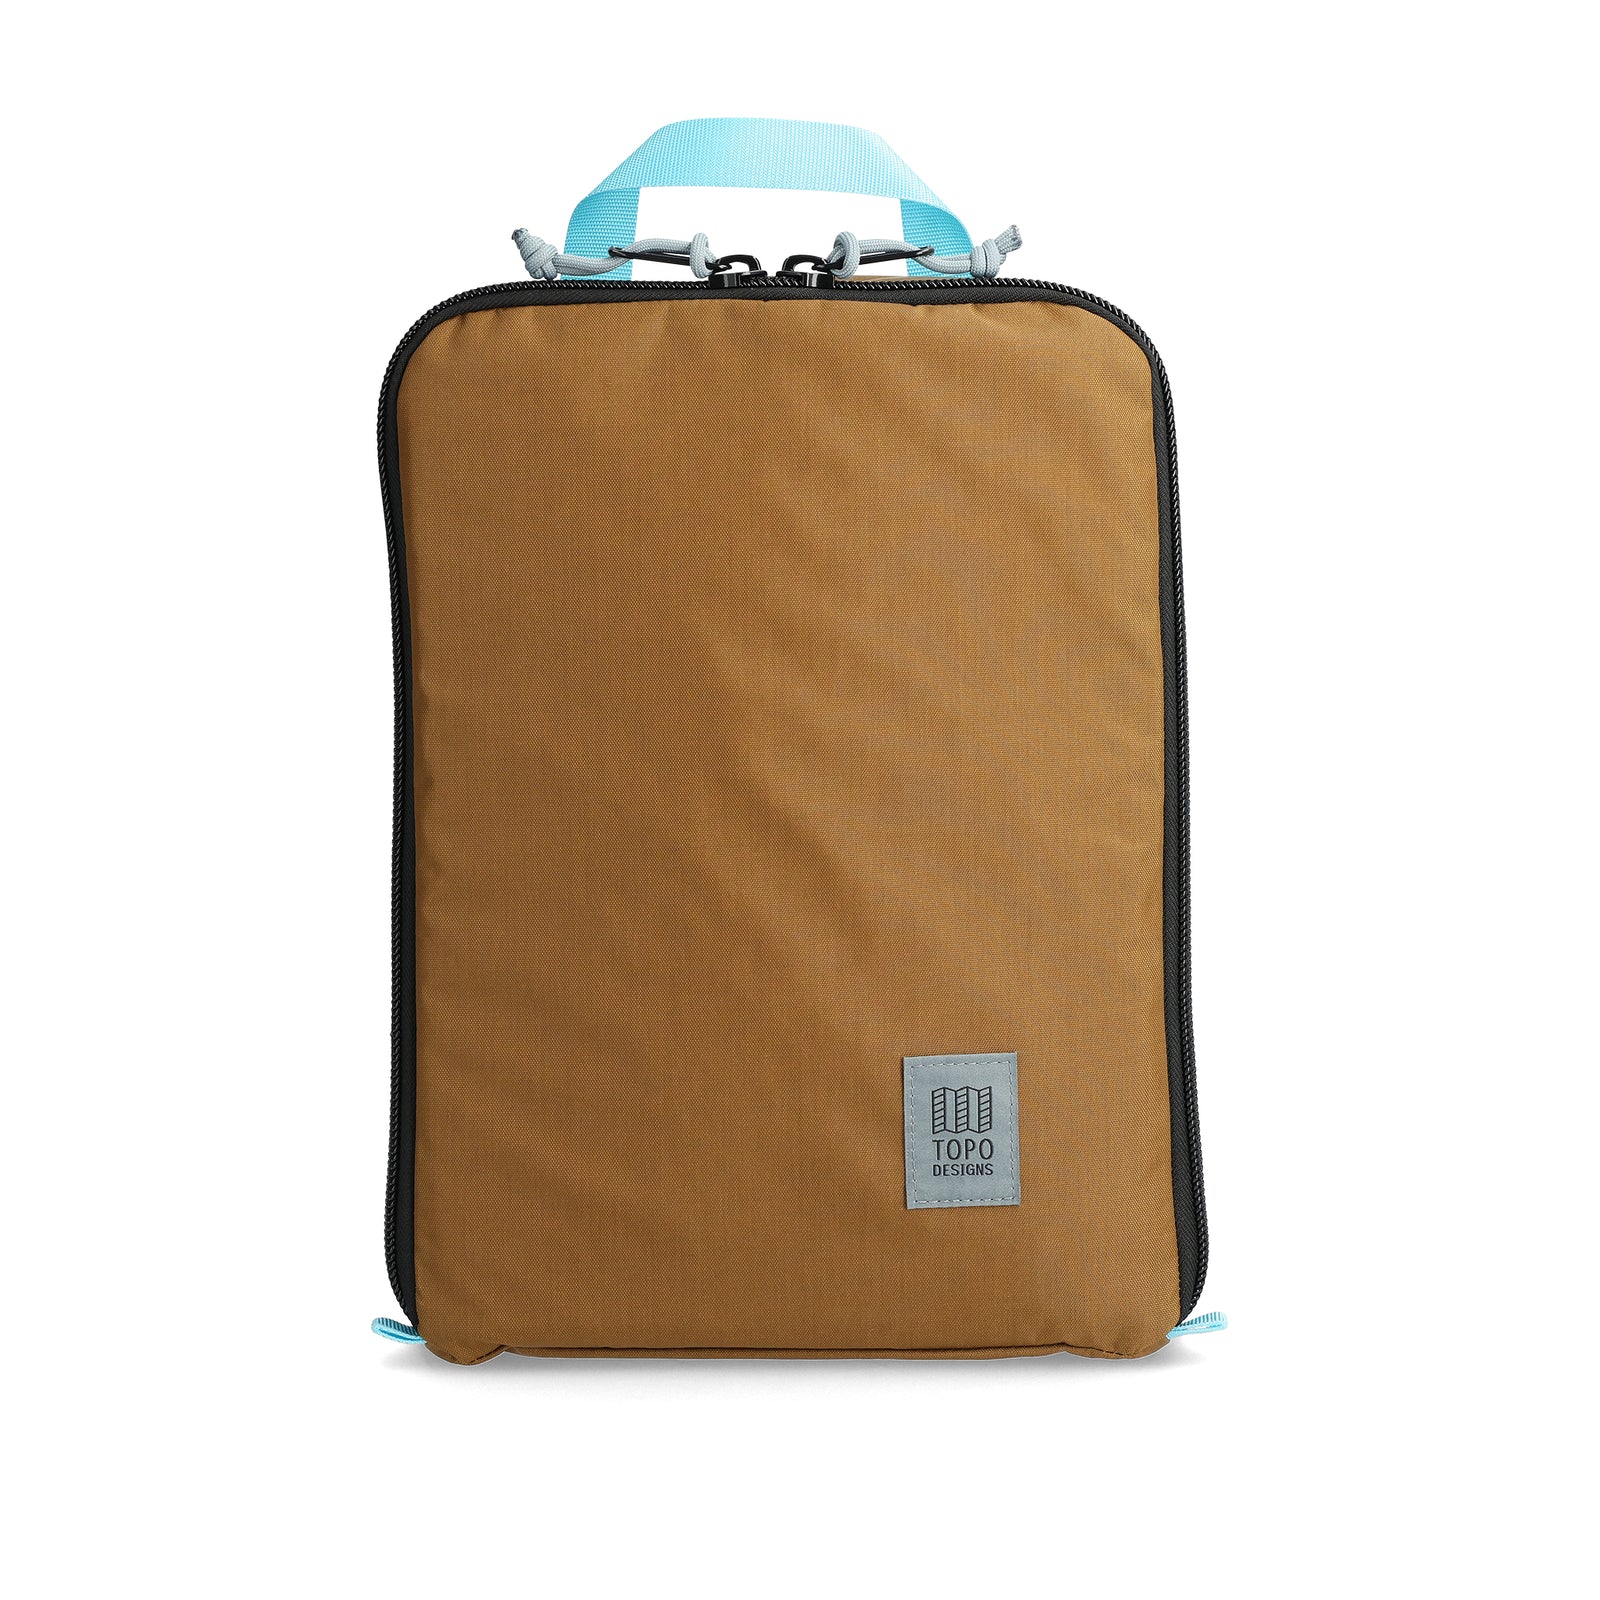 Front View of Topo Designs Pack Bag - 10L in "Dark Khaki"